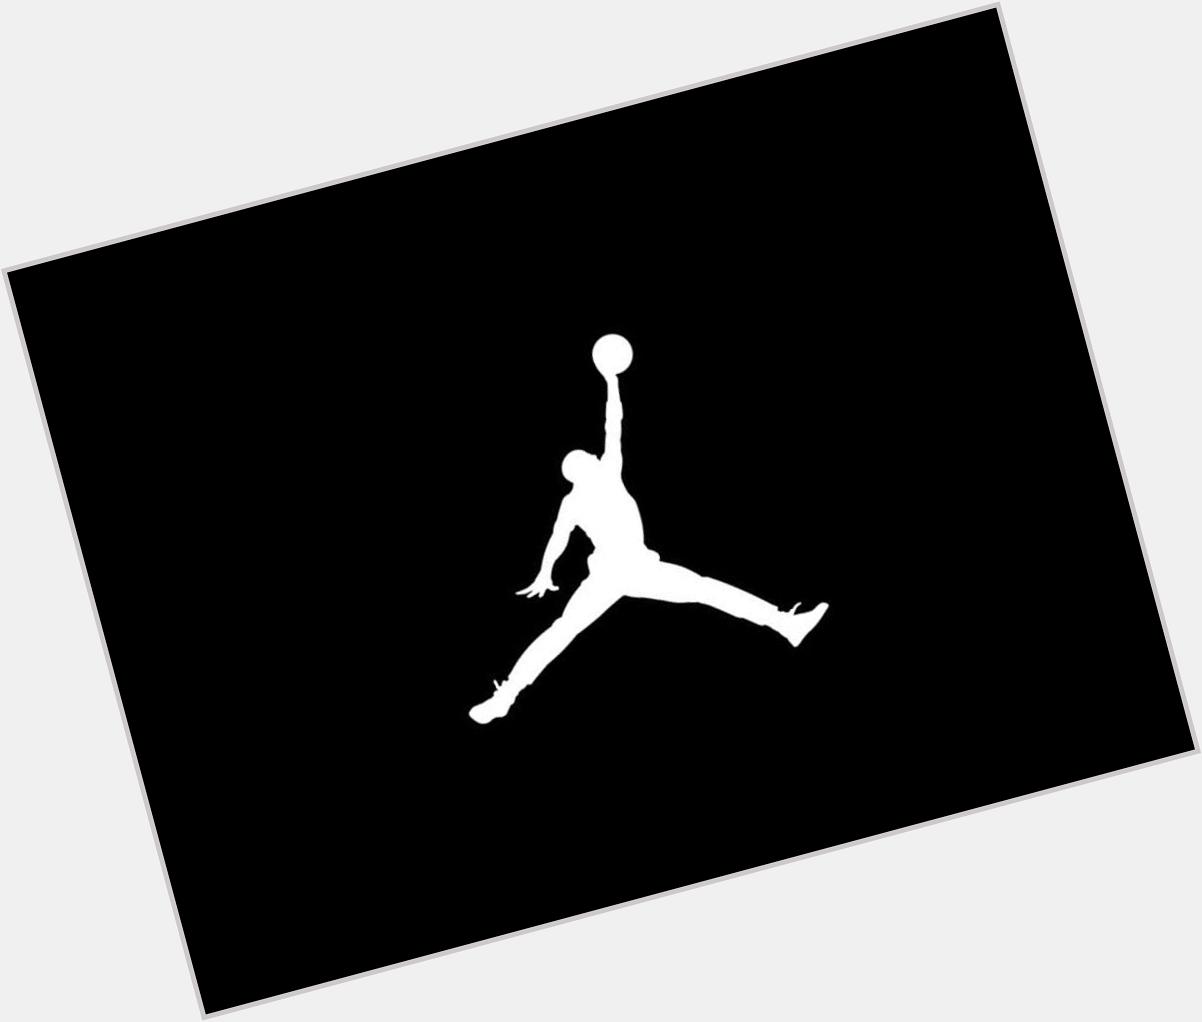 Happy birthday, every athletes idol, Michael Jordan. 